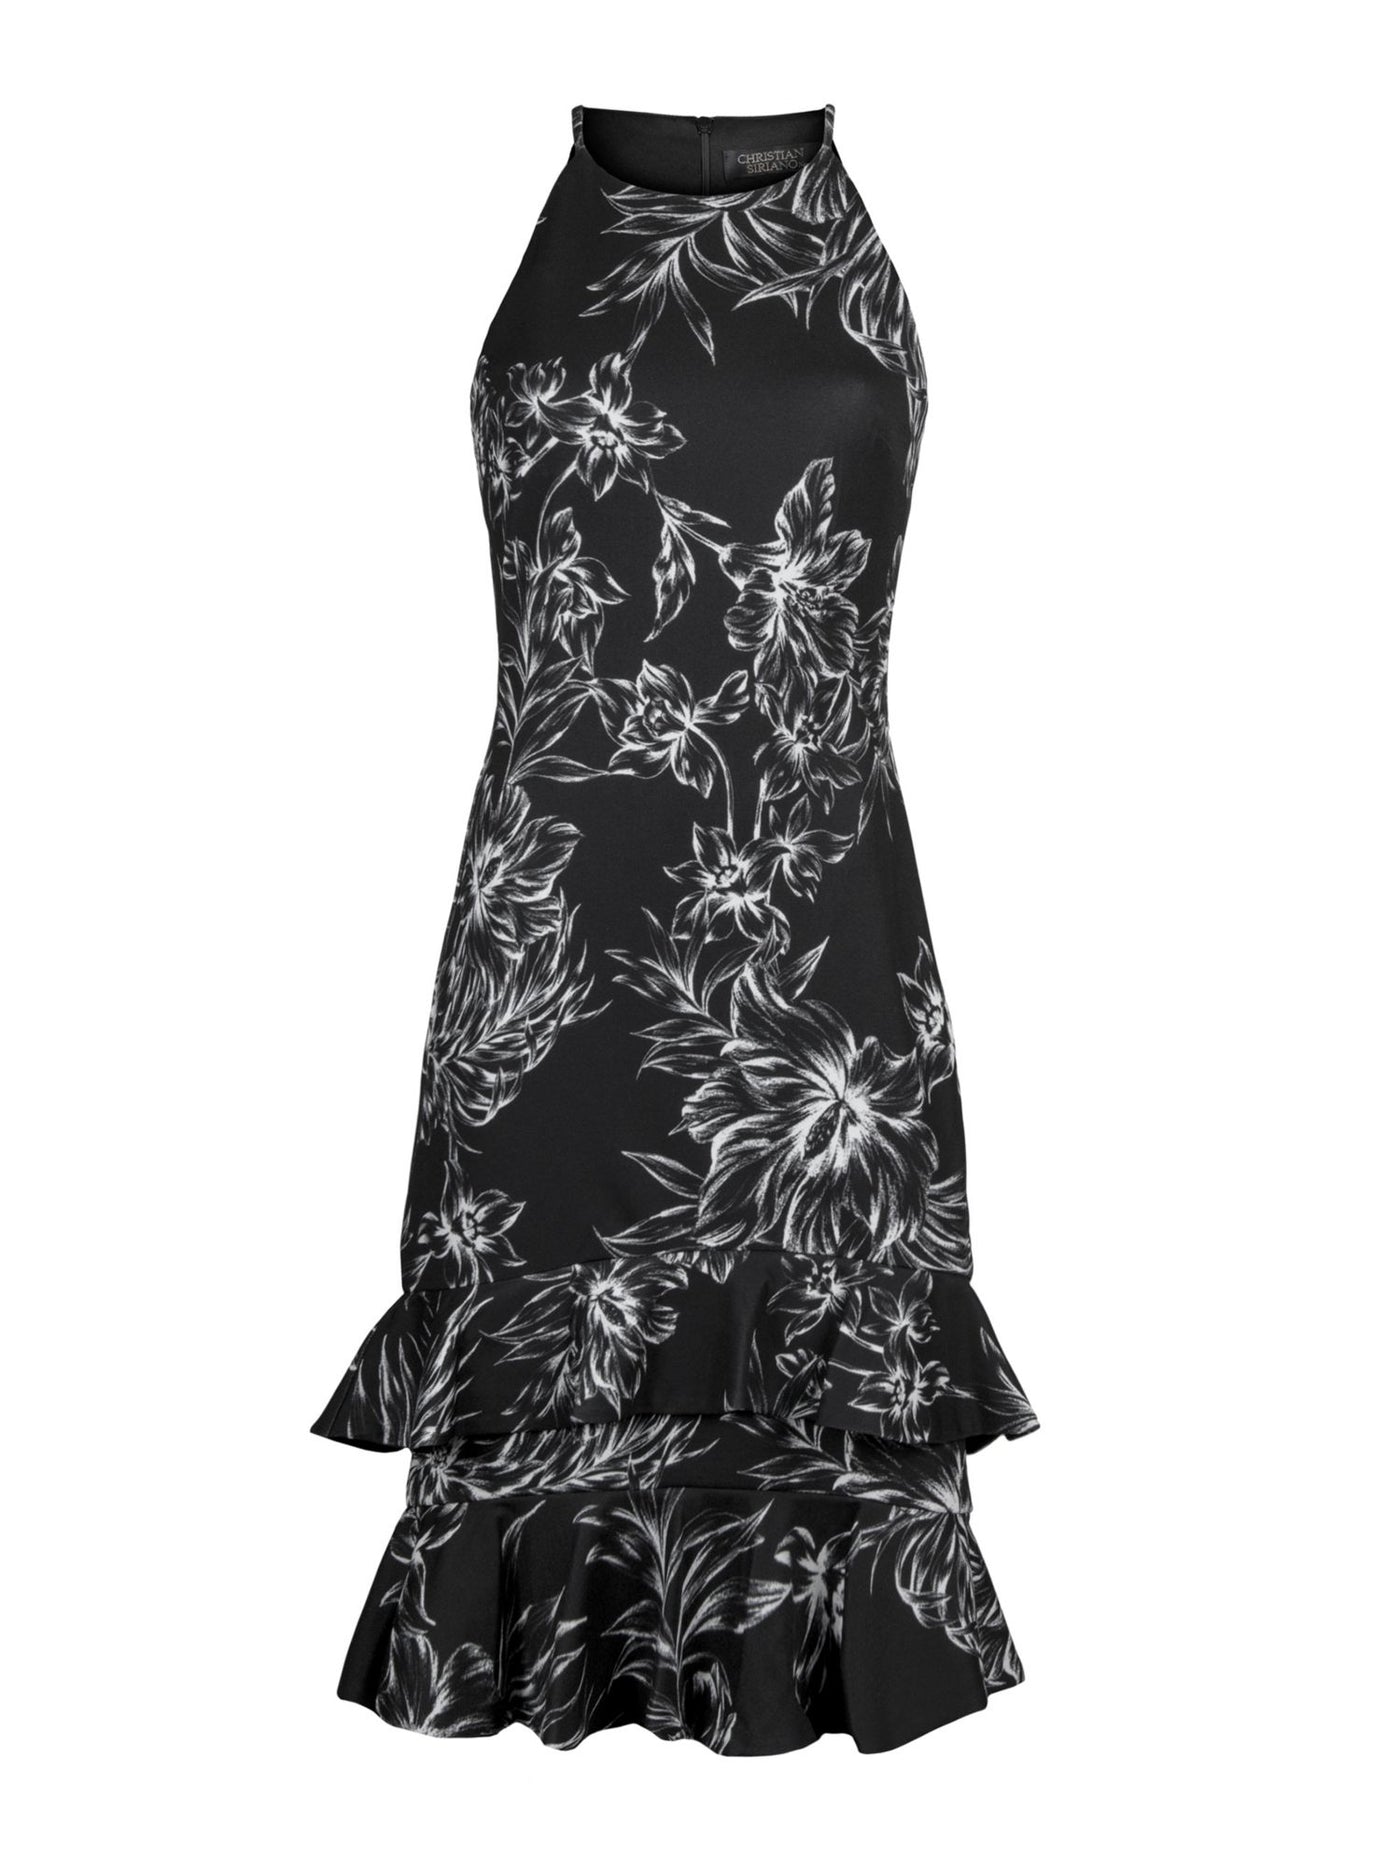 CHRISTIAN SIRIANO Womens Black Stretch Ruffled Zippered Floral Sleeveless Crew Neck Below The Knee Evening Sheath Dress XS